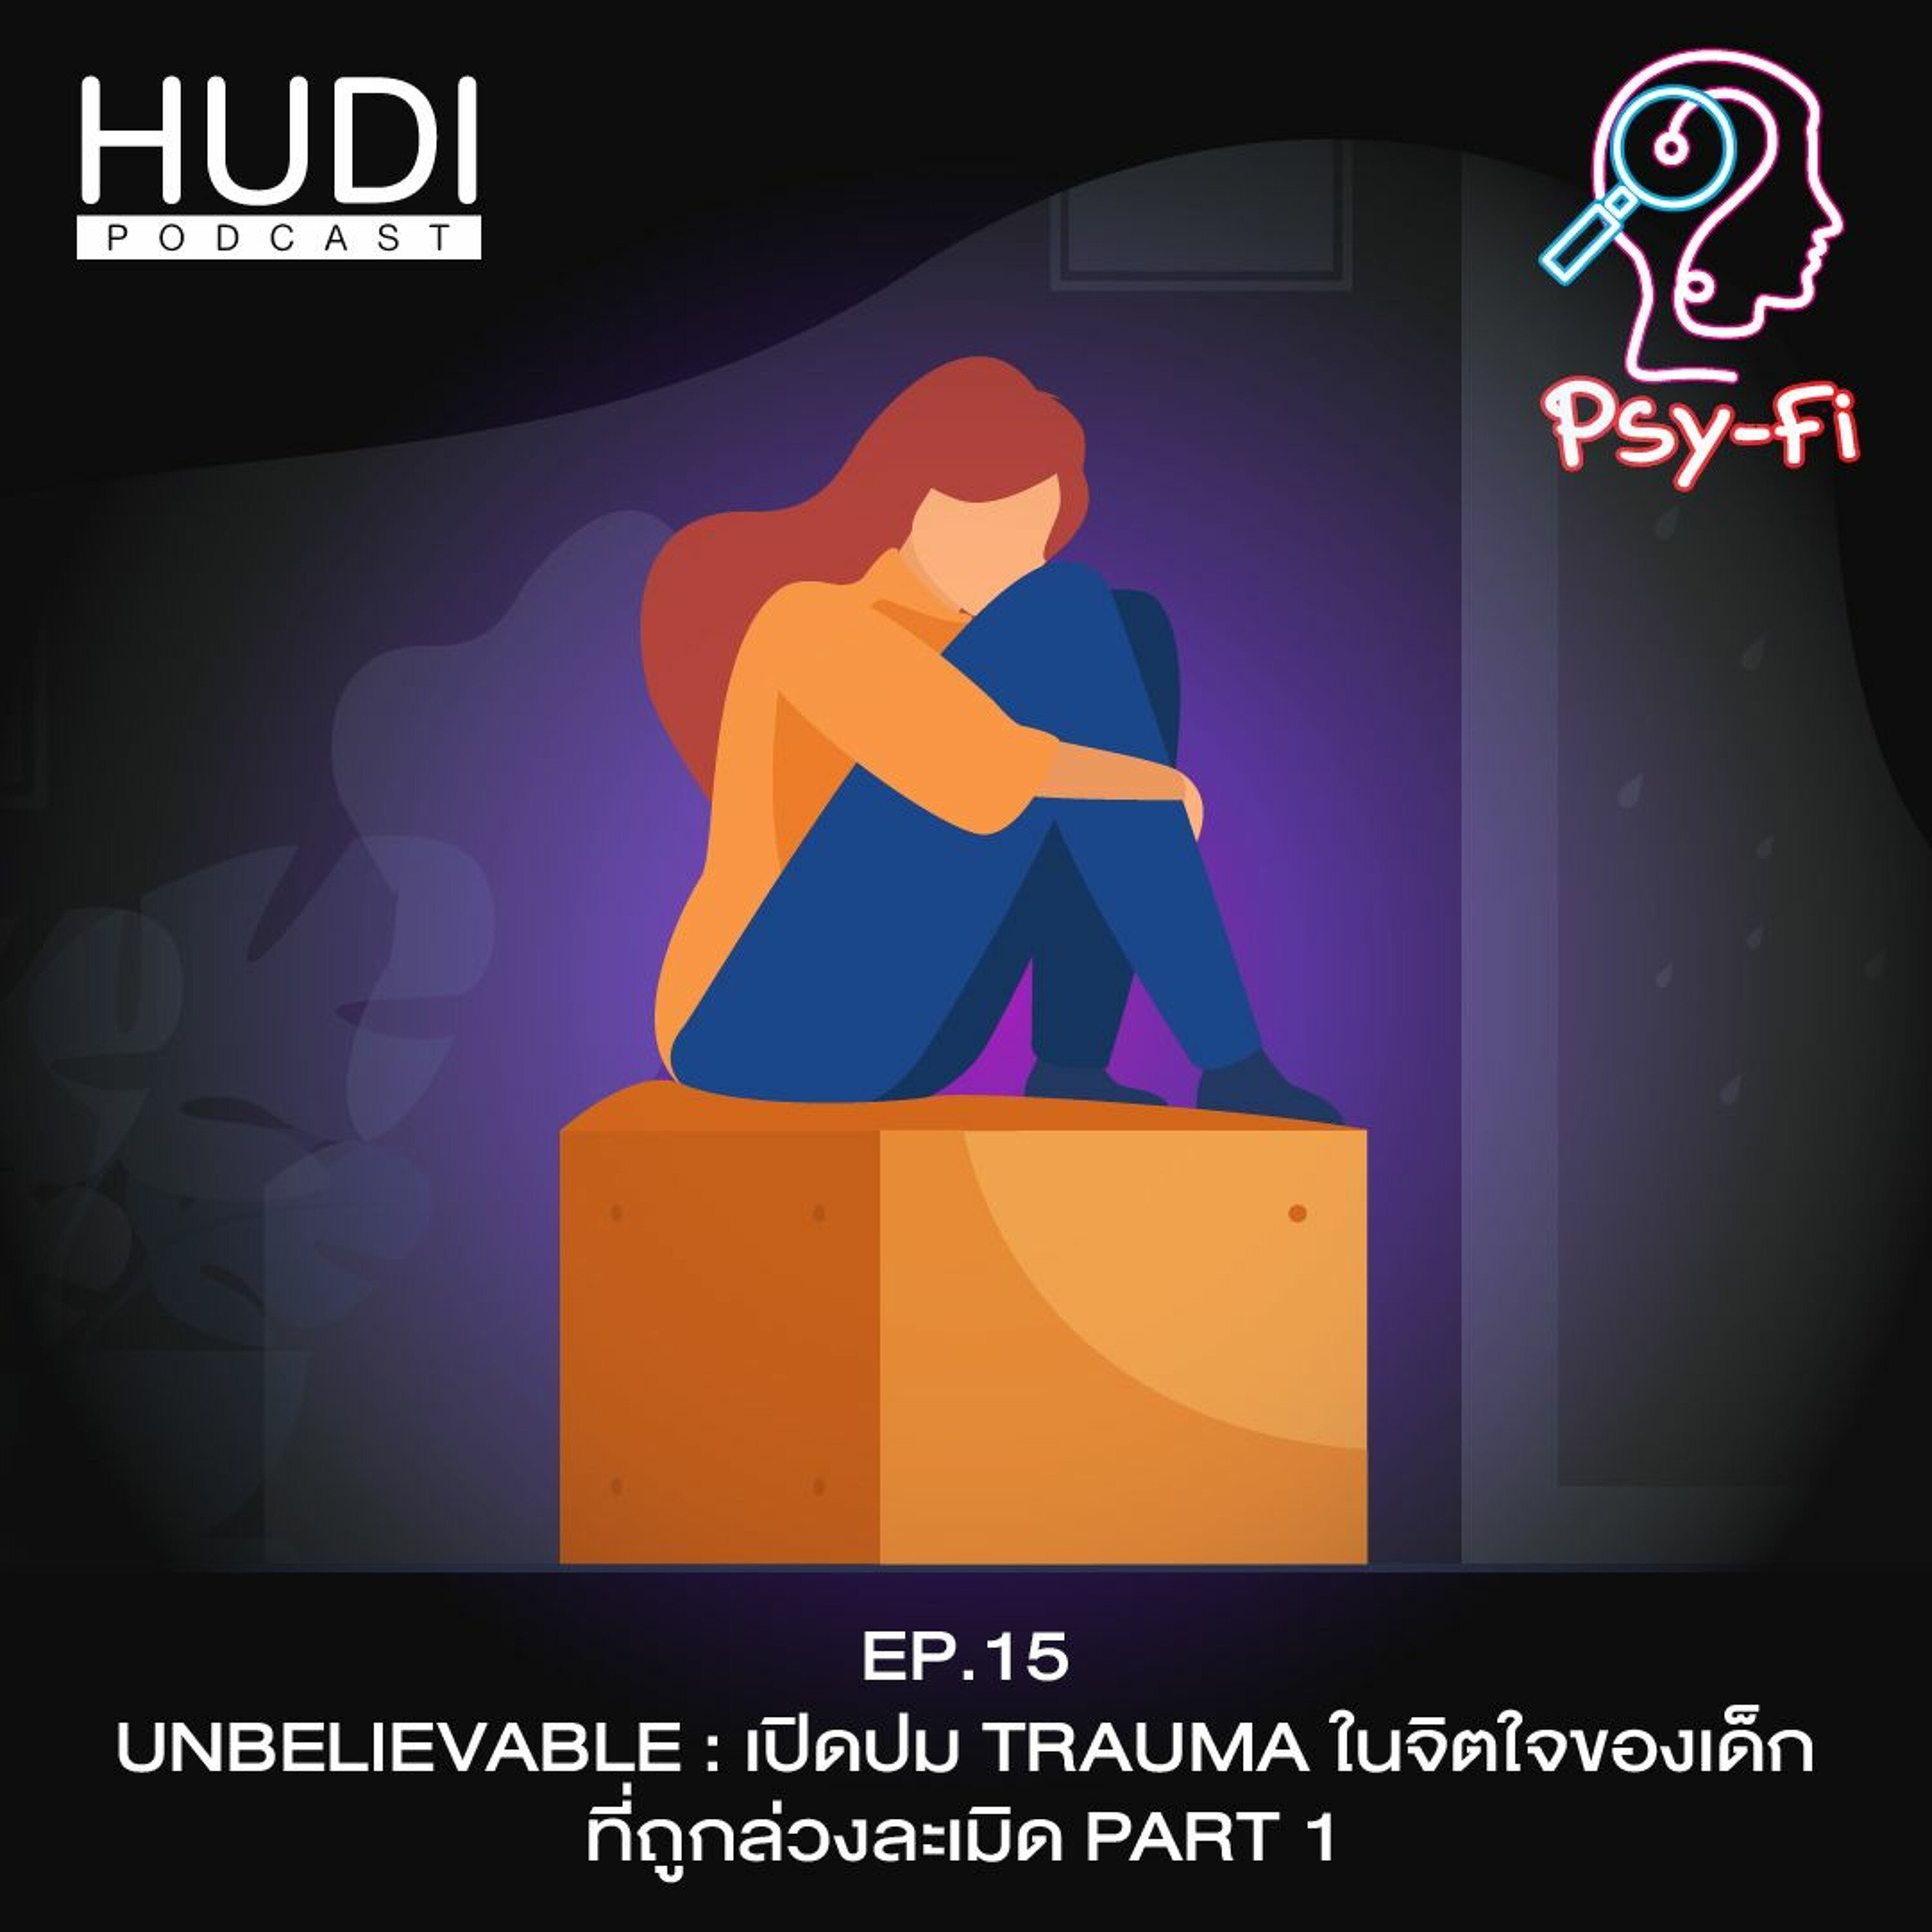 Psy-Fi Ep.15 - UNBELIEVABLE เปิดปม Trauma ในจิตใจของเด็กที่ถูกล่วงละเมิด (Part 1)